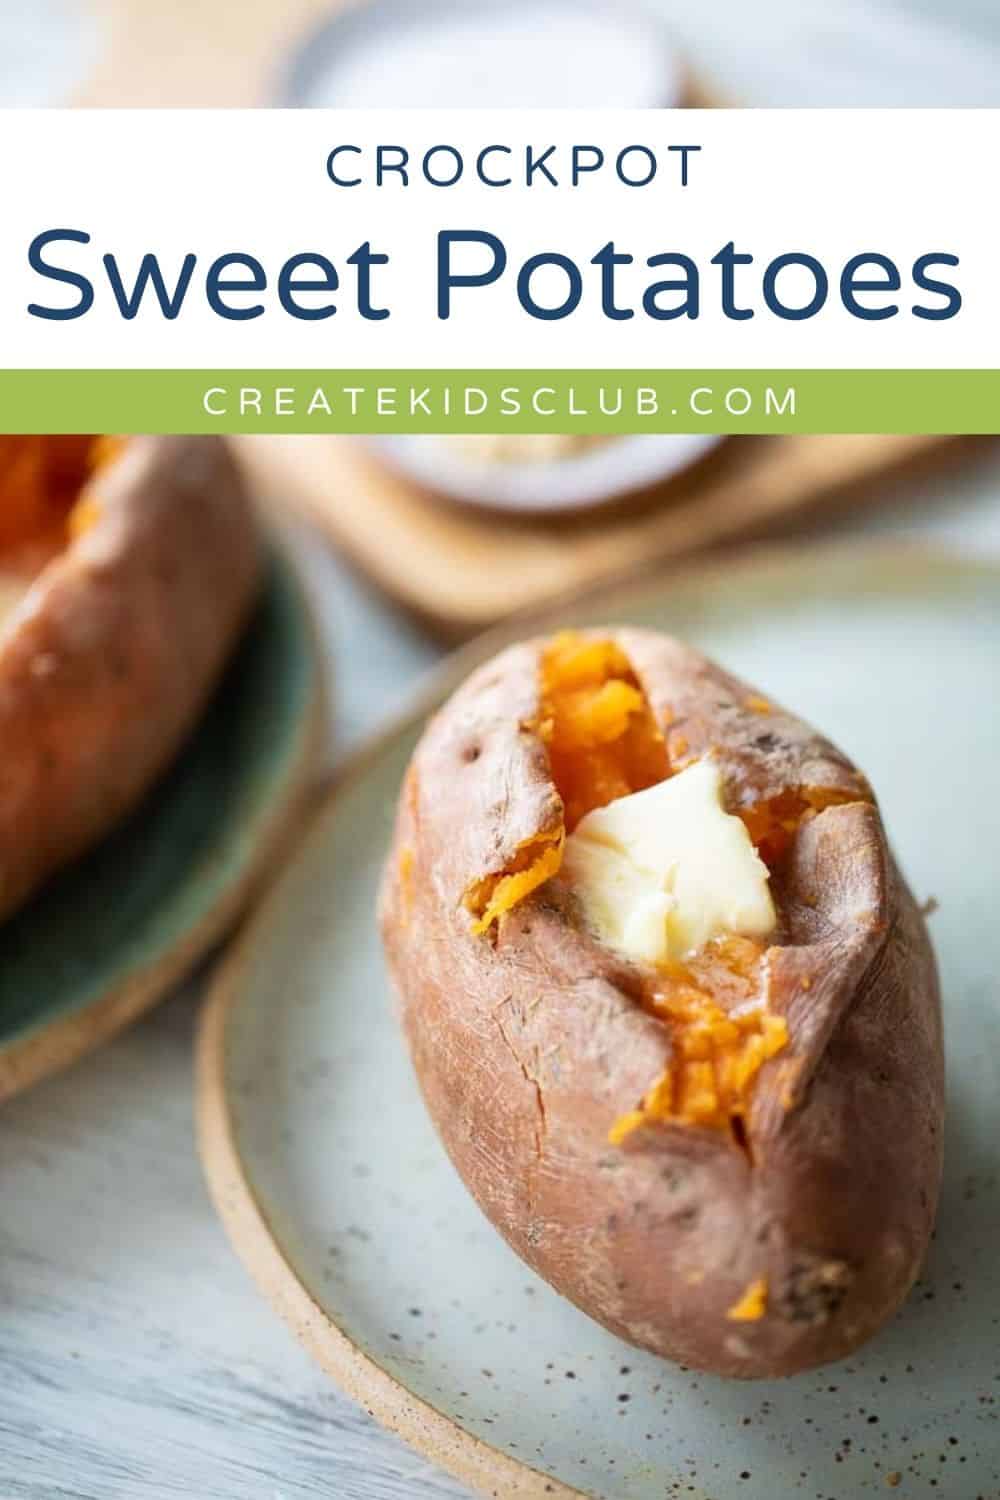 Pin showing crockpot sweet potatoes.